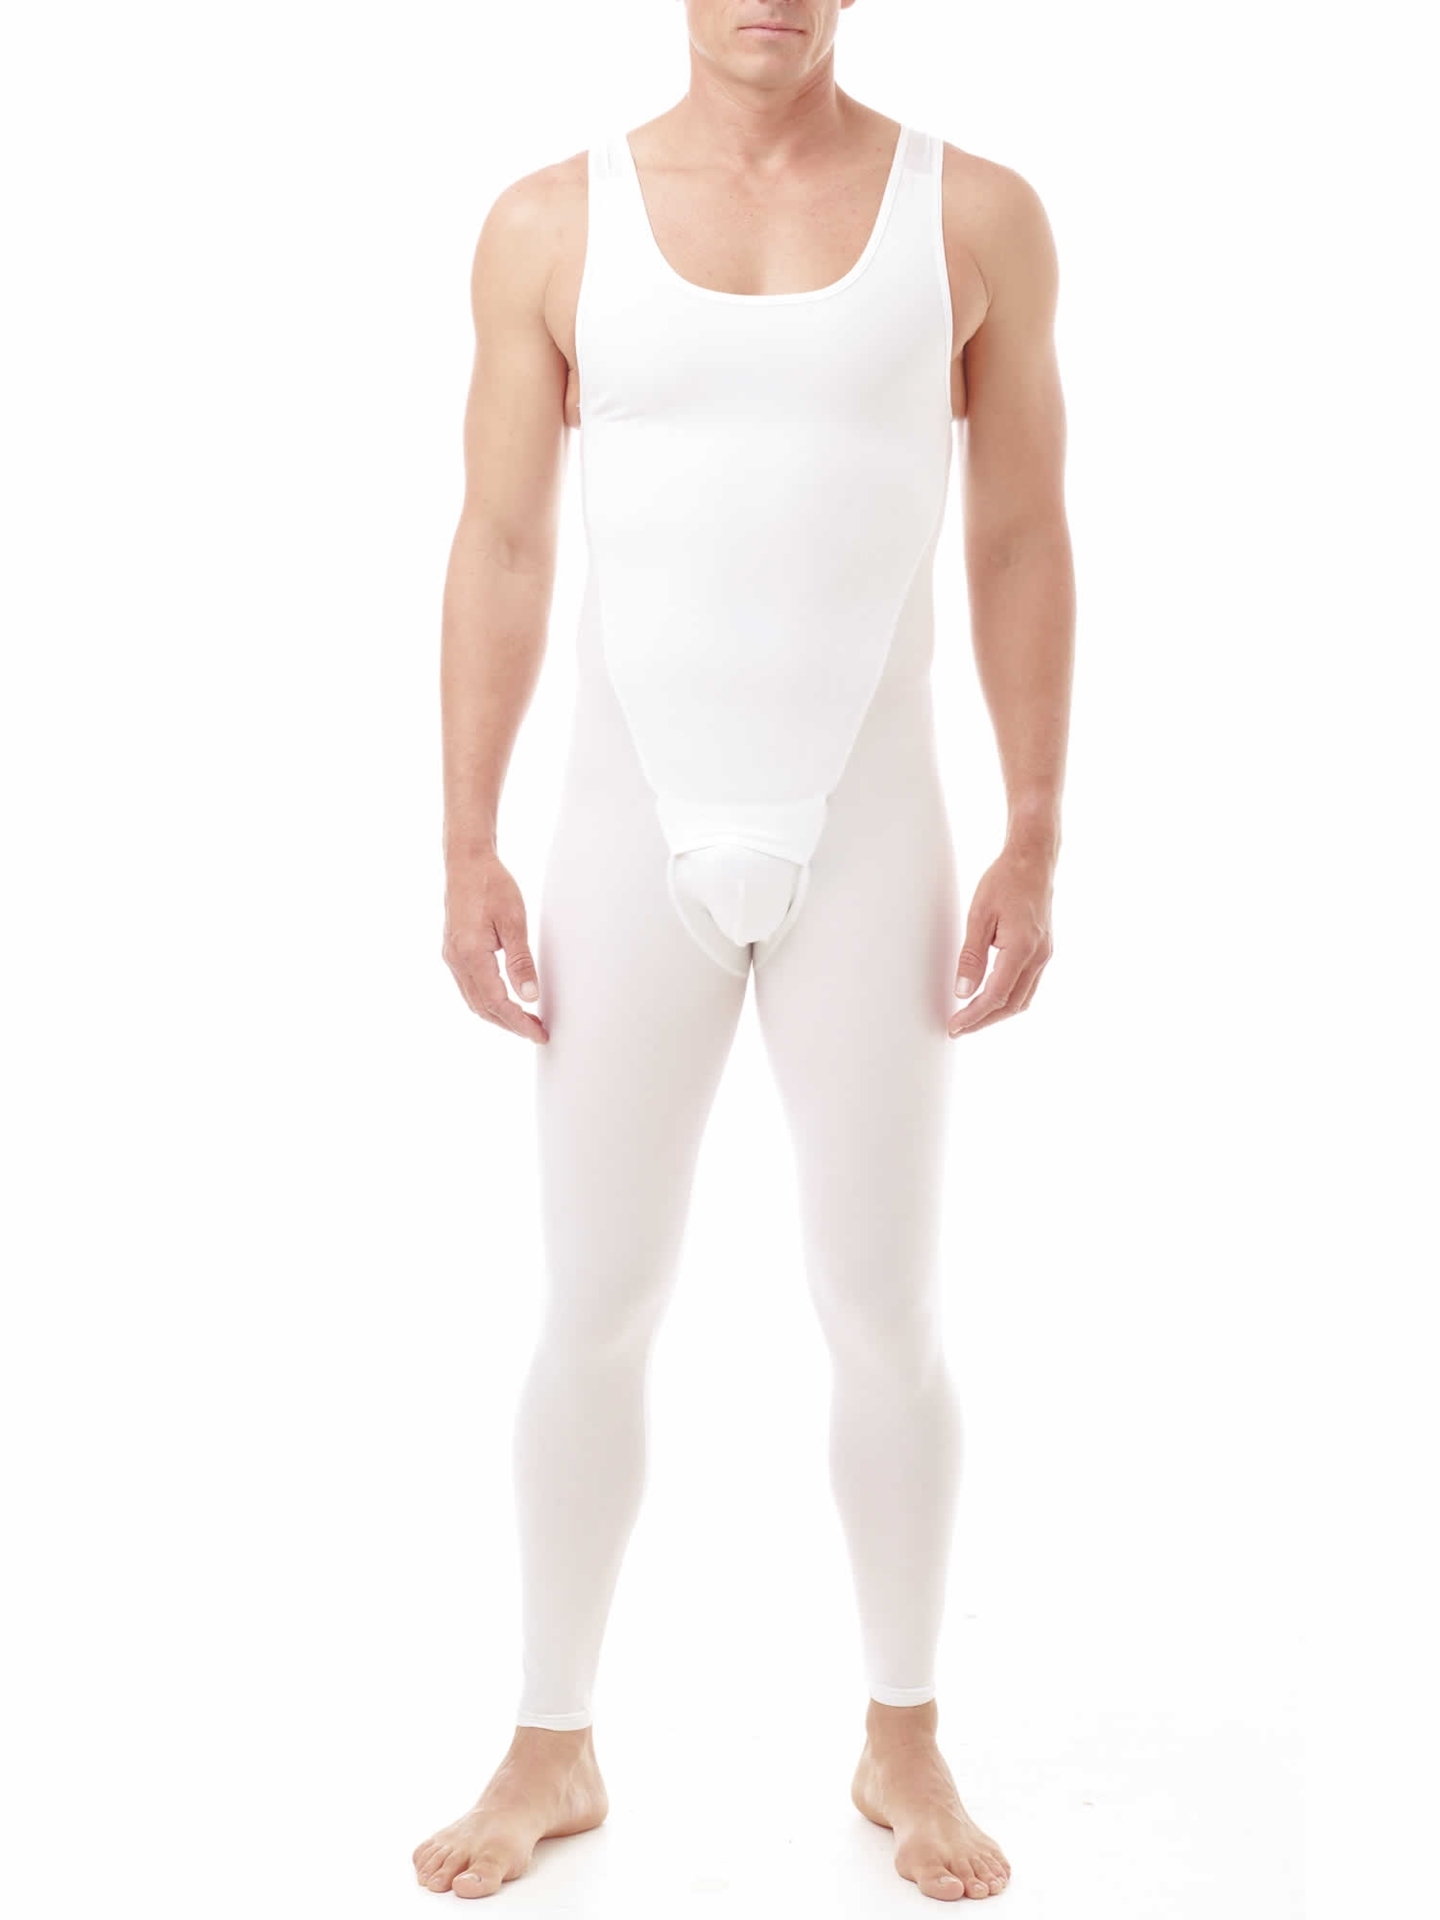 https://www.underworks.com/images/thumbs/0001784_mens-compression-bodysuit-girdle.jpeg